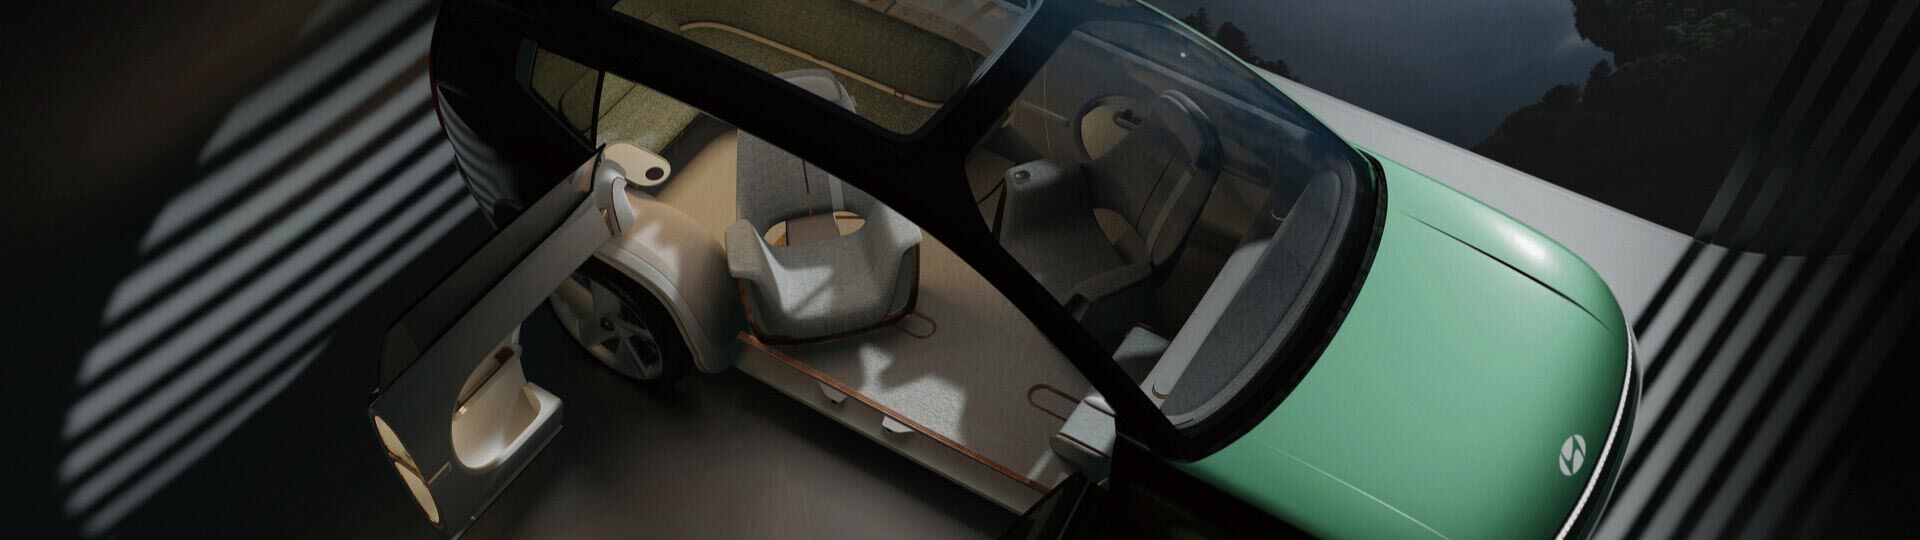 Design Philosophy : Concept car SEVEN with a view of the interior through the open door